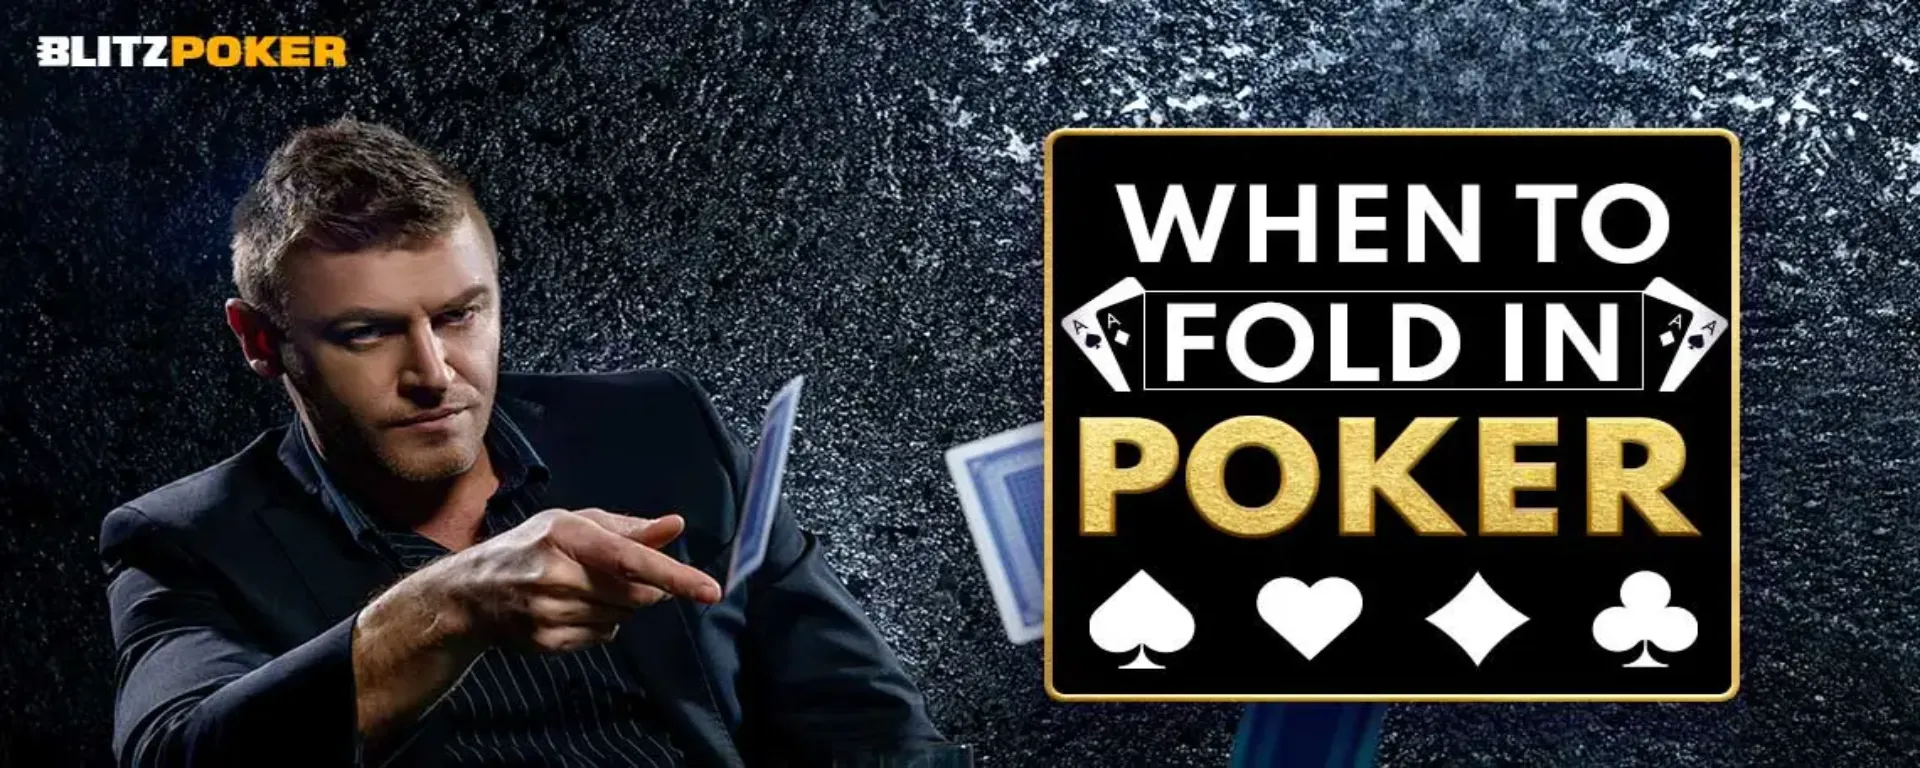 When to Fold in Poker